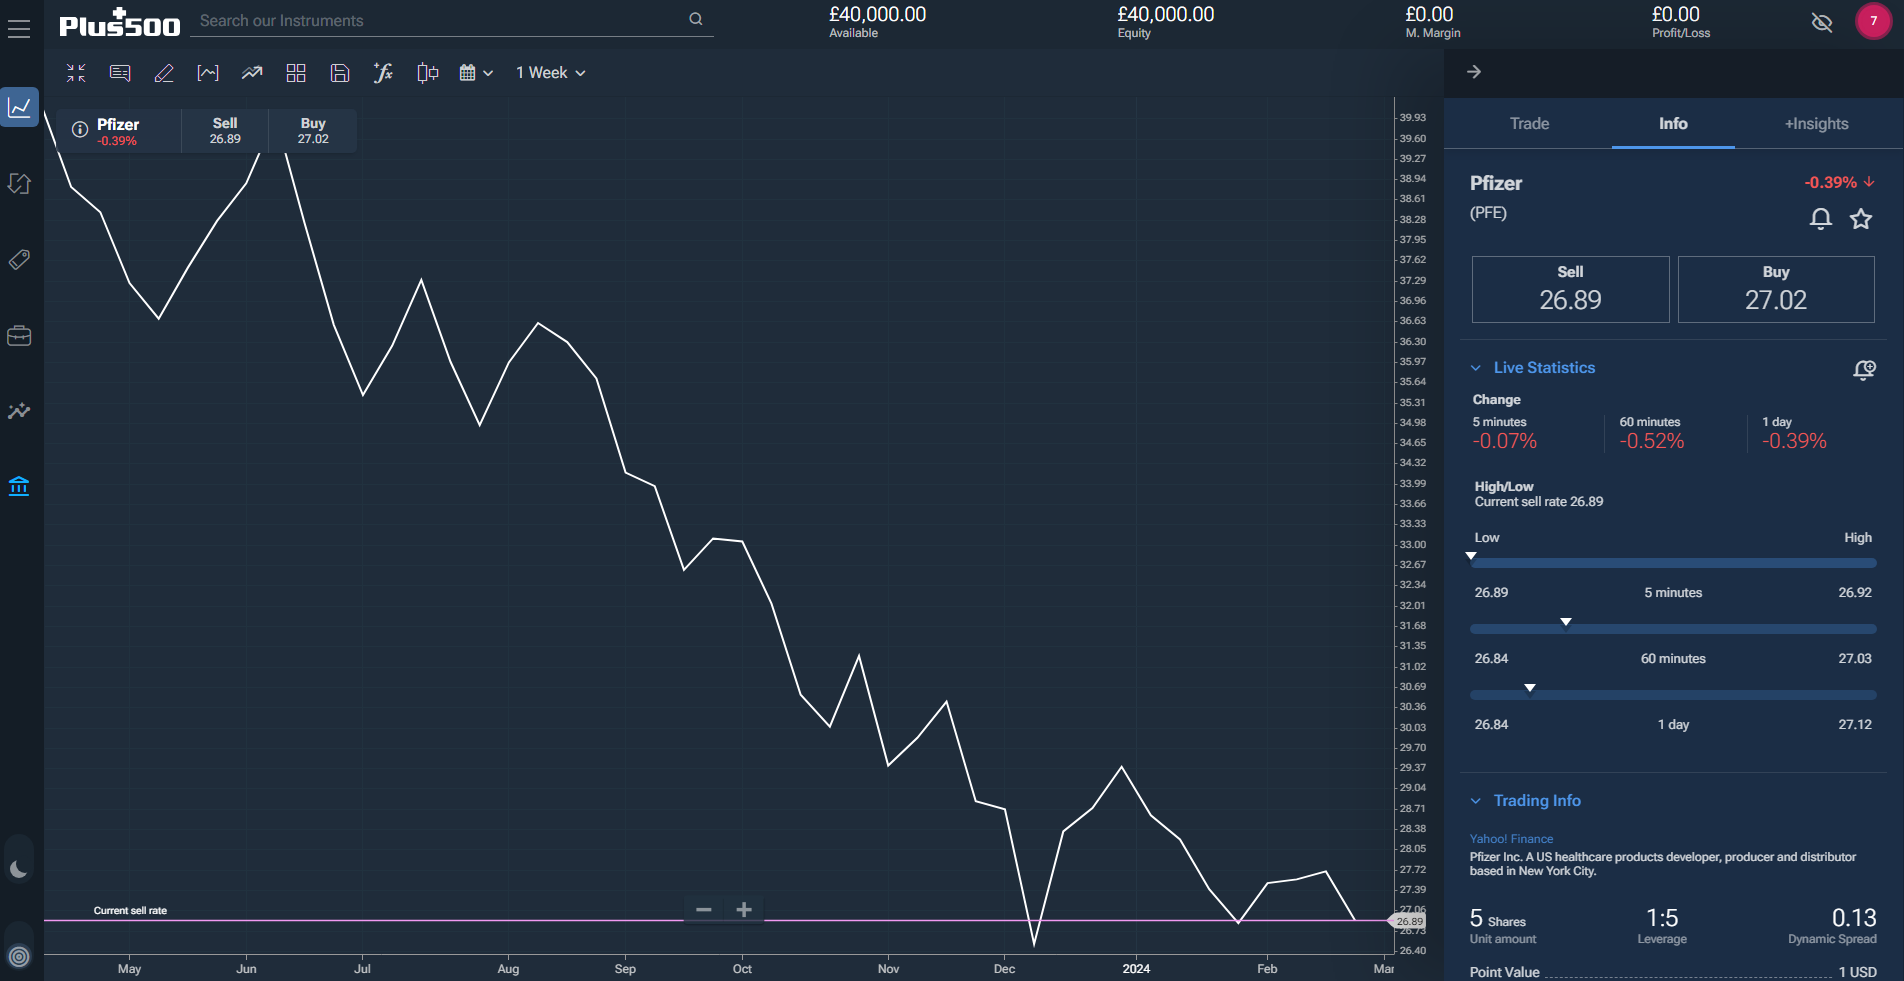 A screenshot of Pfizer's stock price chart on Plus500